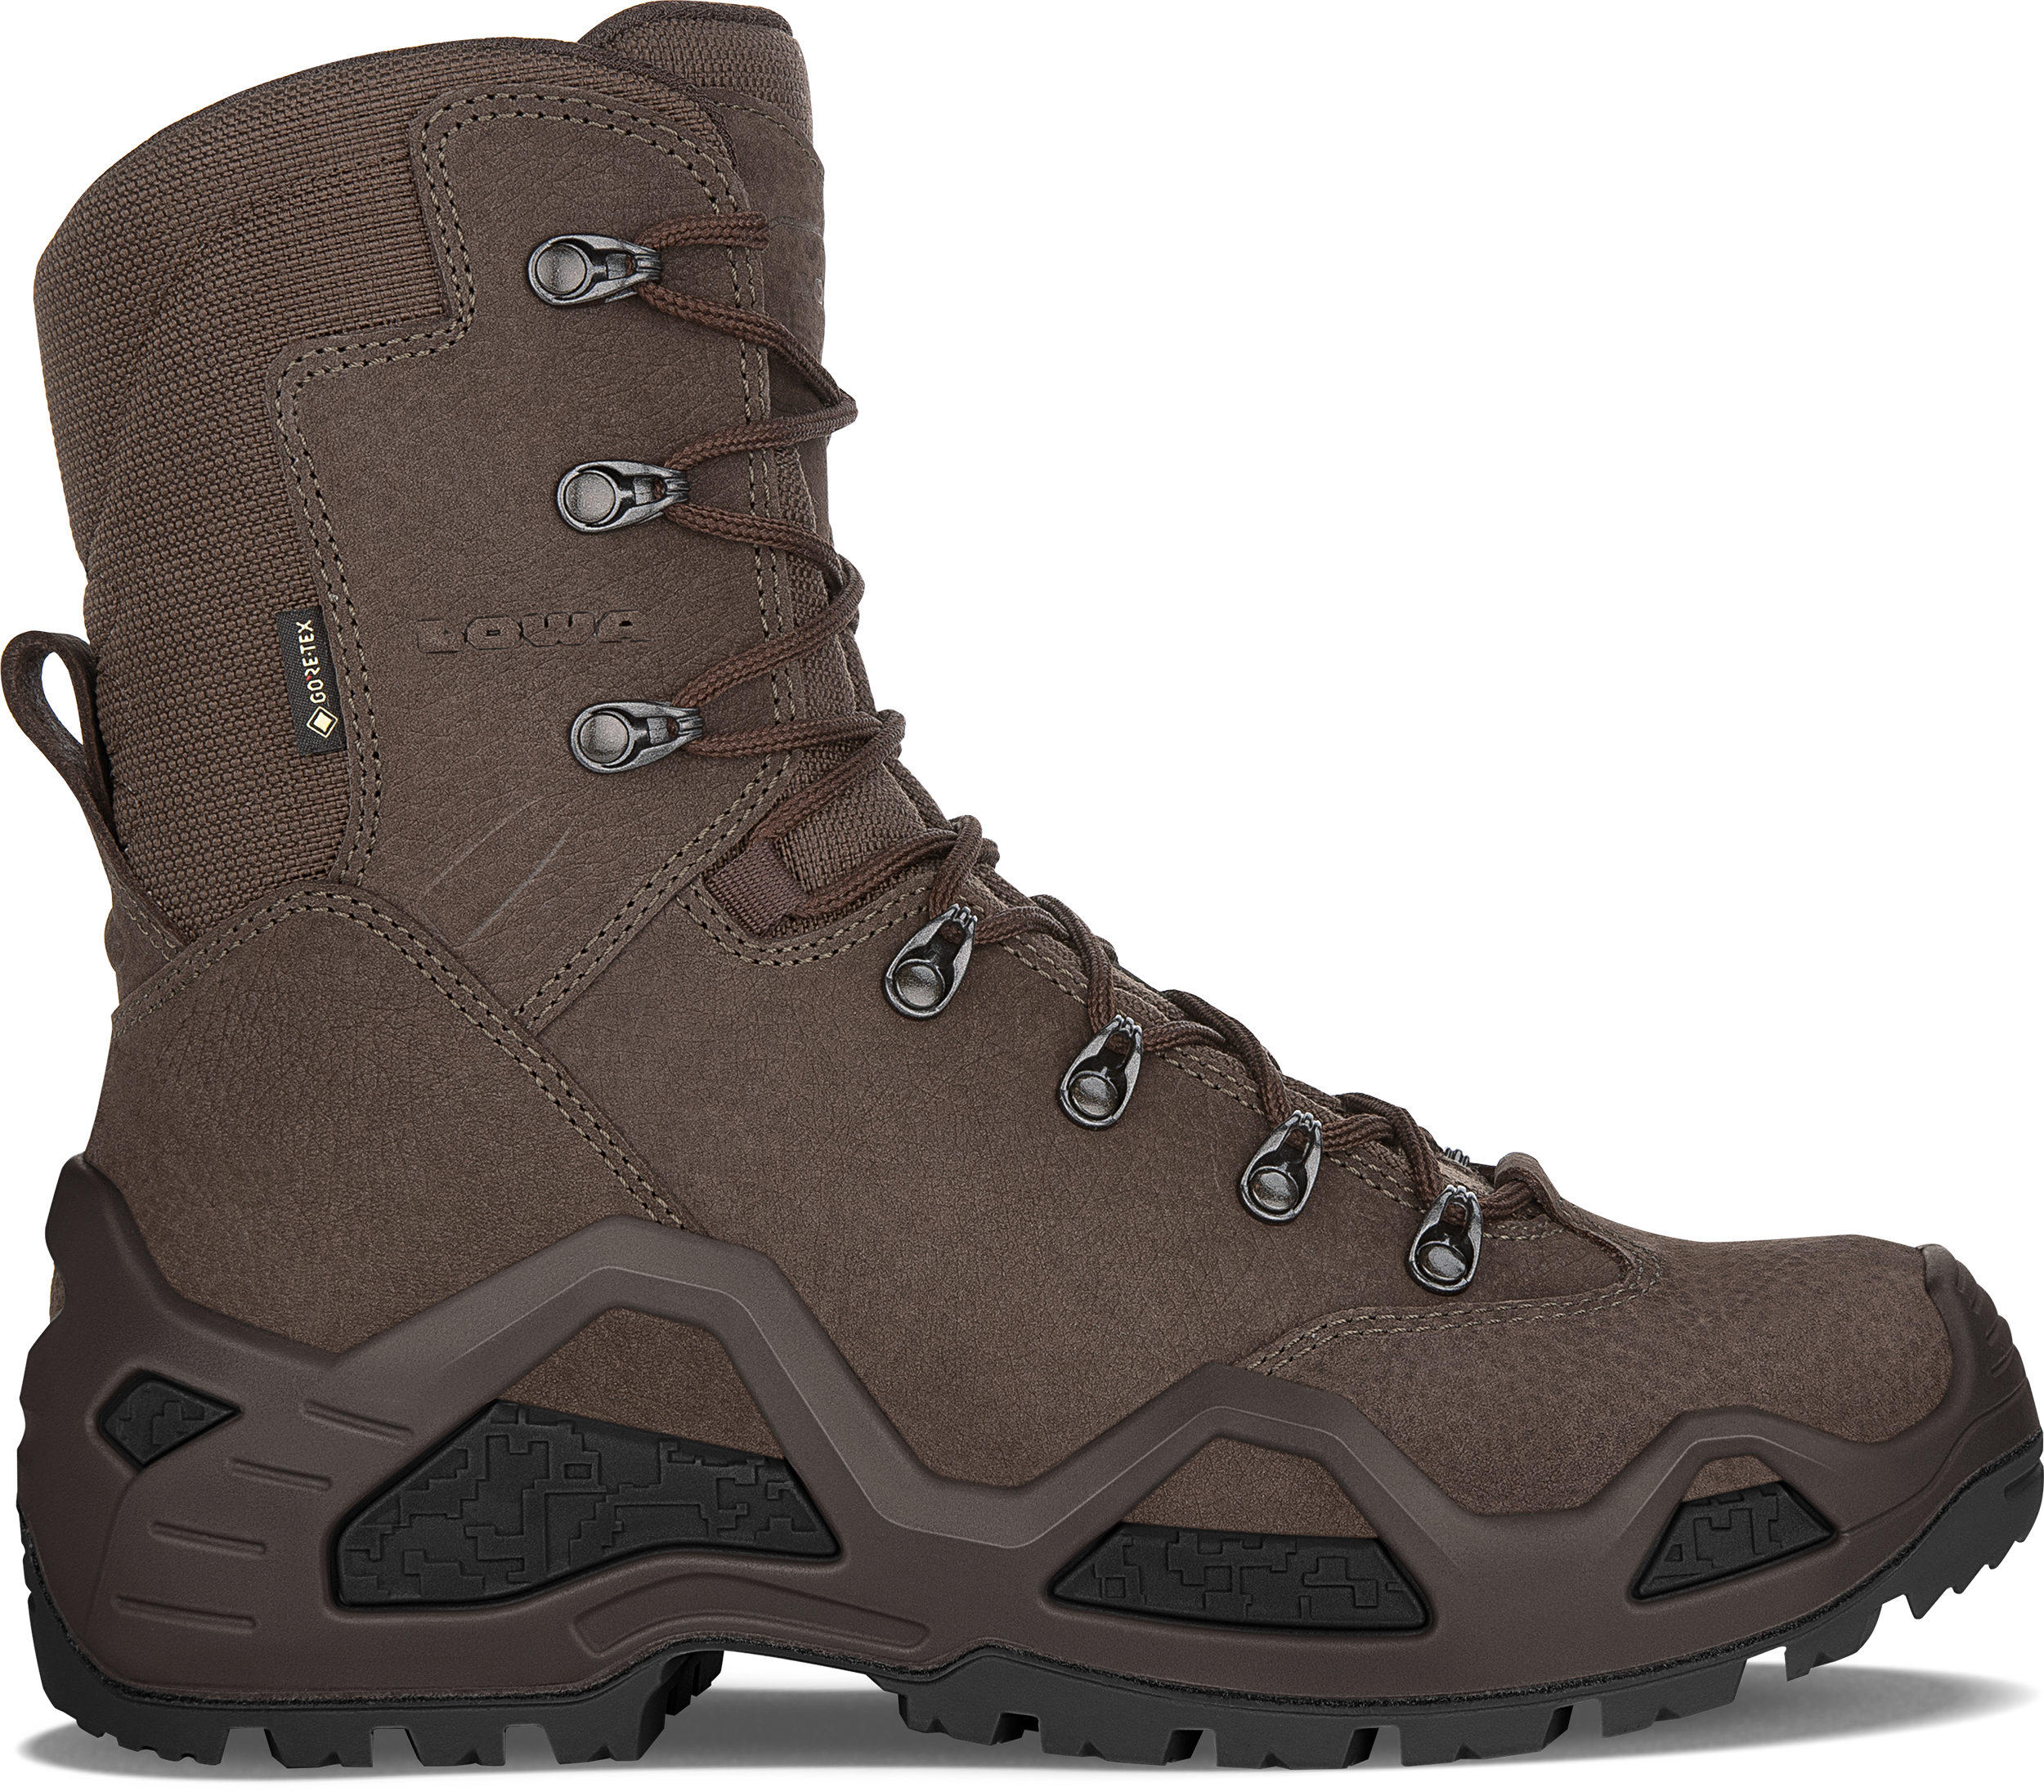 Z-8N GTX C: TASK FORCE: PATROL Shoes for Men | LOWA INT